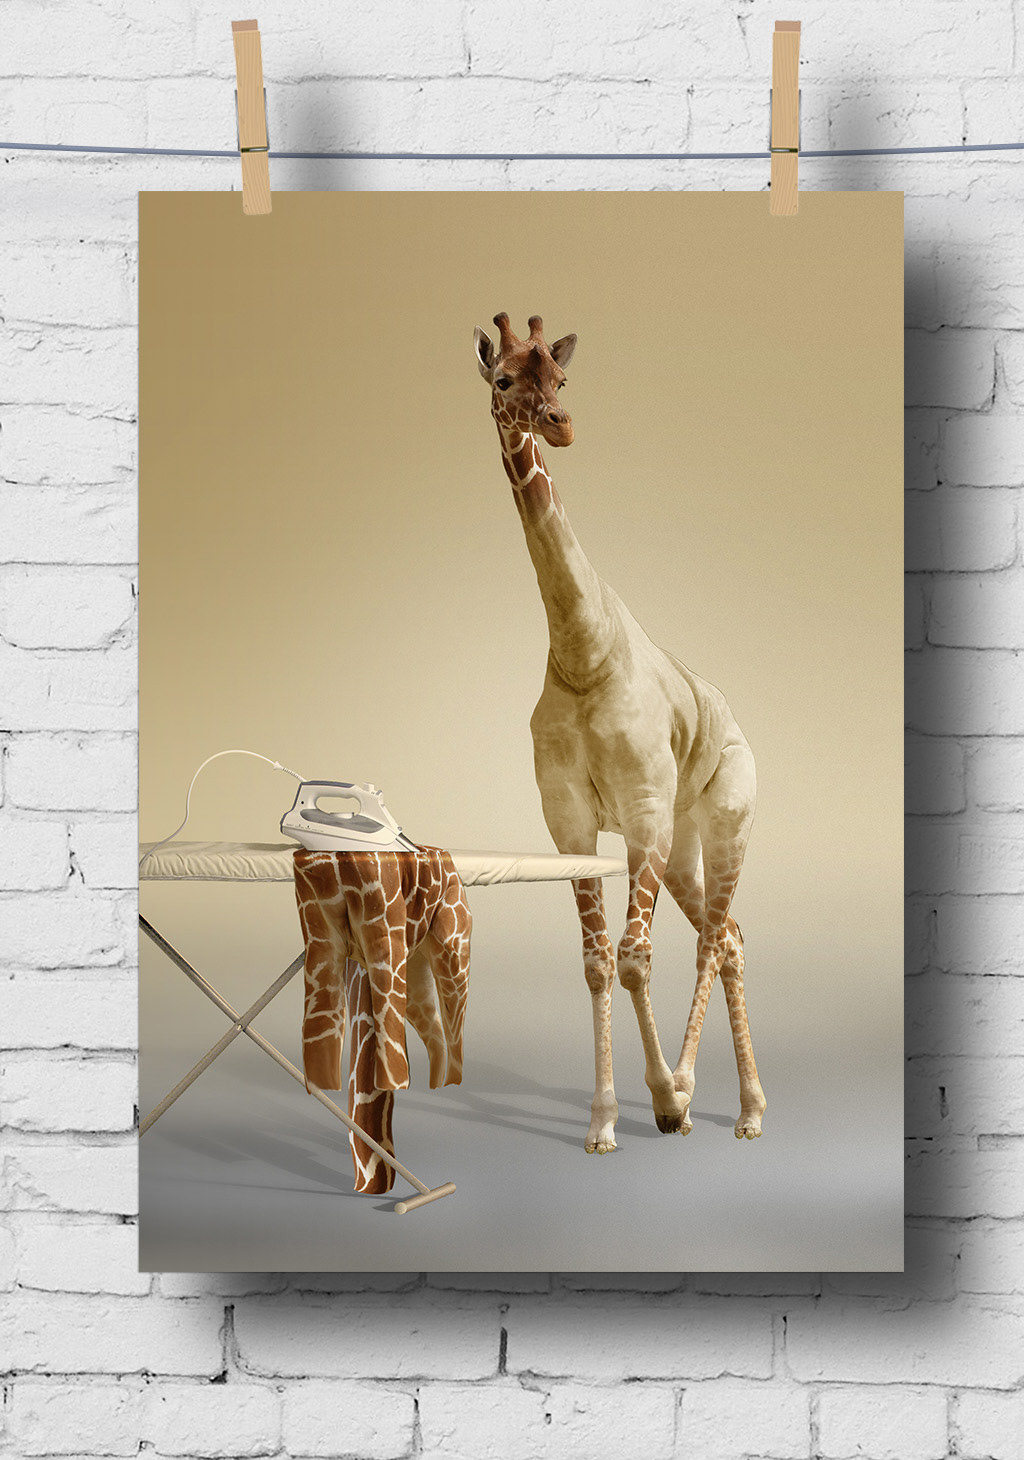 Undress a Giraffe in photoshop